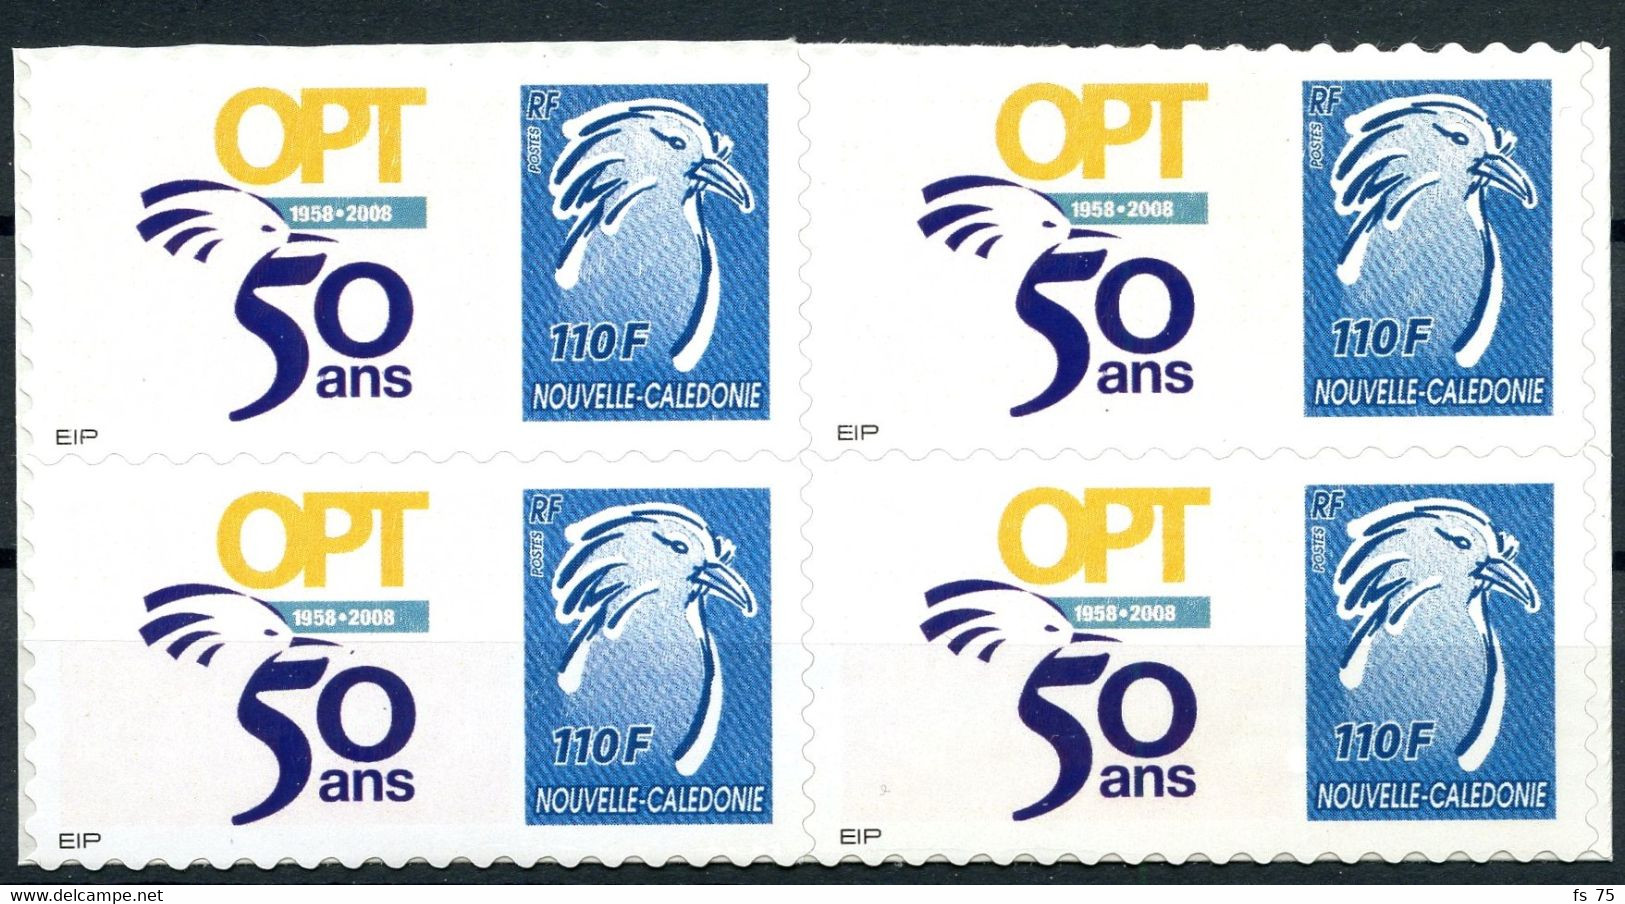 NOUVELLE CALEDONIE - N°1051 / 1052 - BLOCS DE 4 - TIMBRES PERSONNALISES ADHESIFS - CAGOU, LOGO "OPT" - Unused Stamps